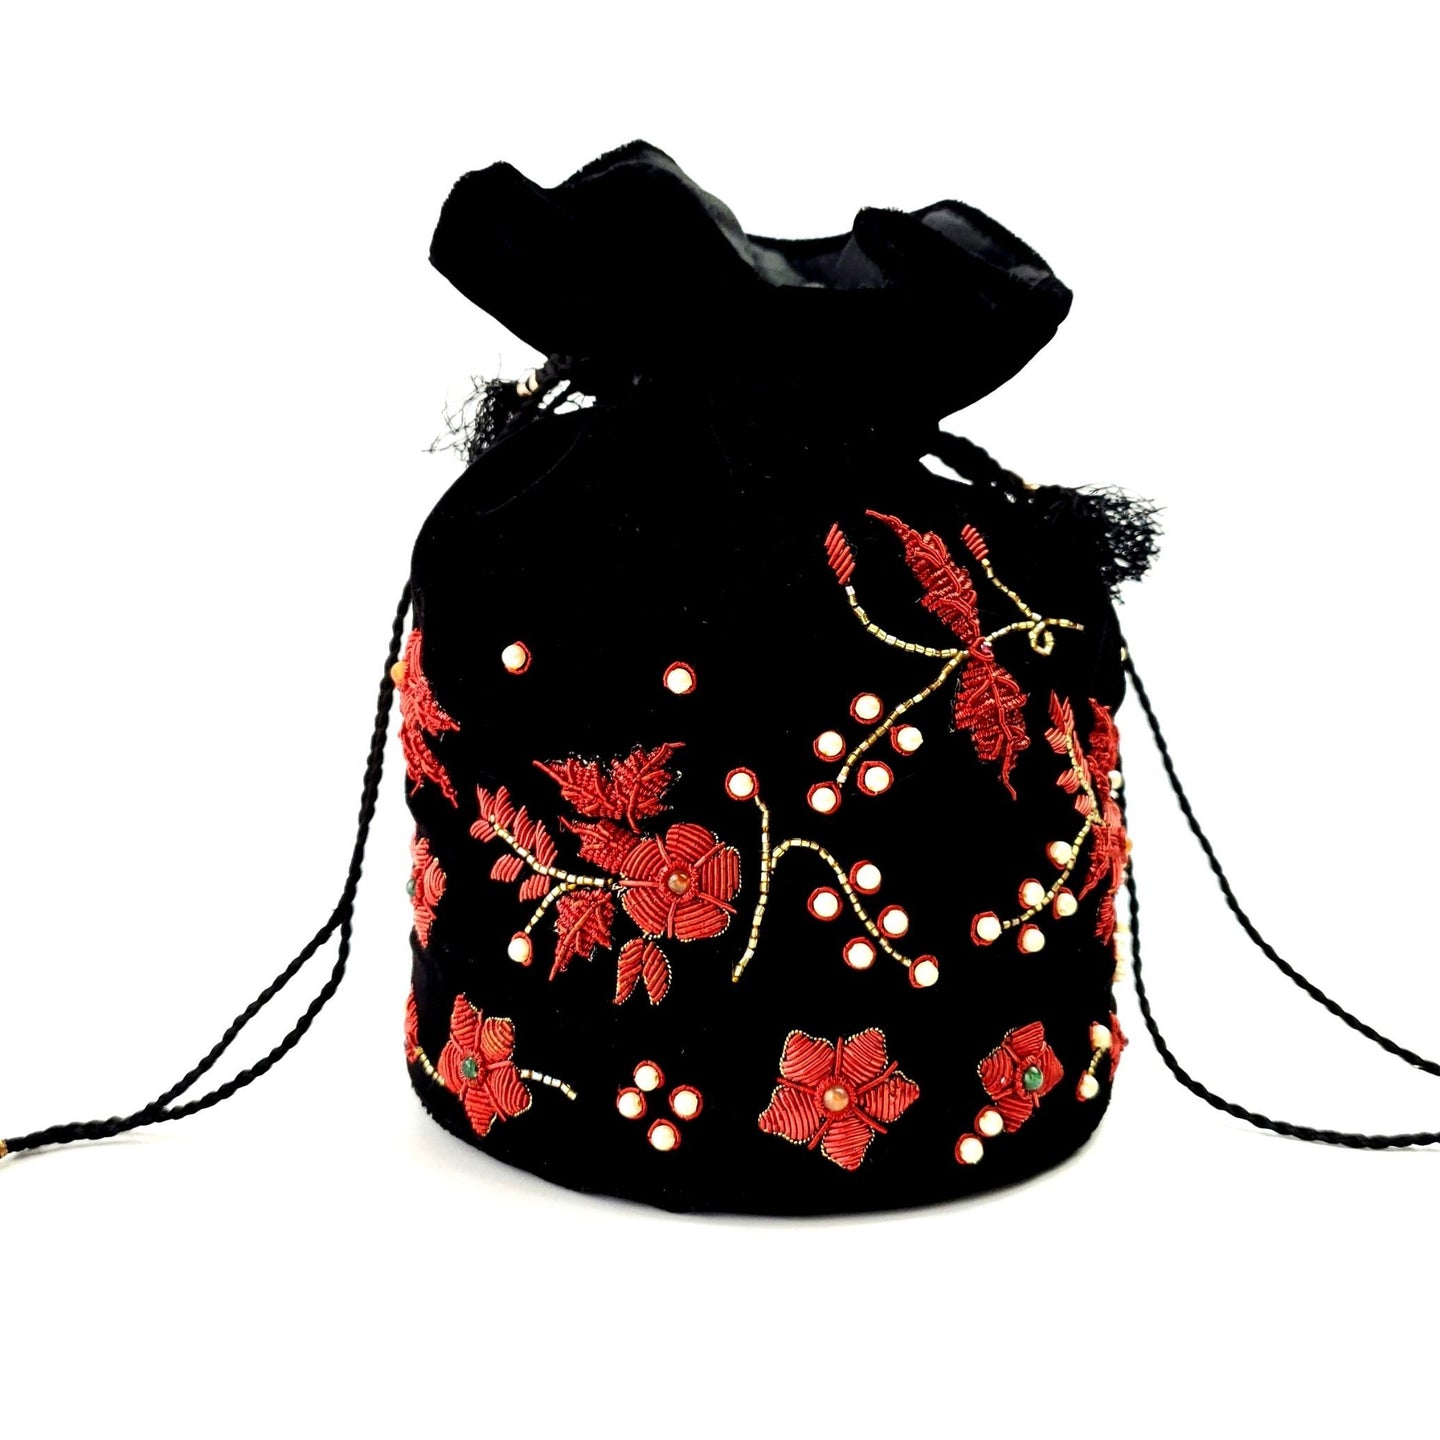 Black velvet bucket bag potli bag embroidered with red flowers, BoutiqueByMariam.